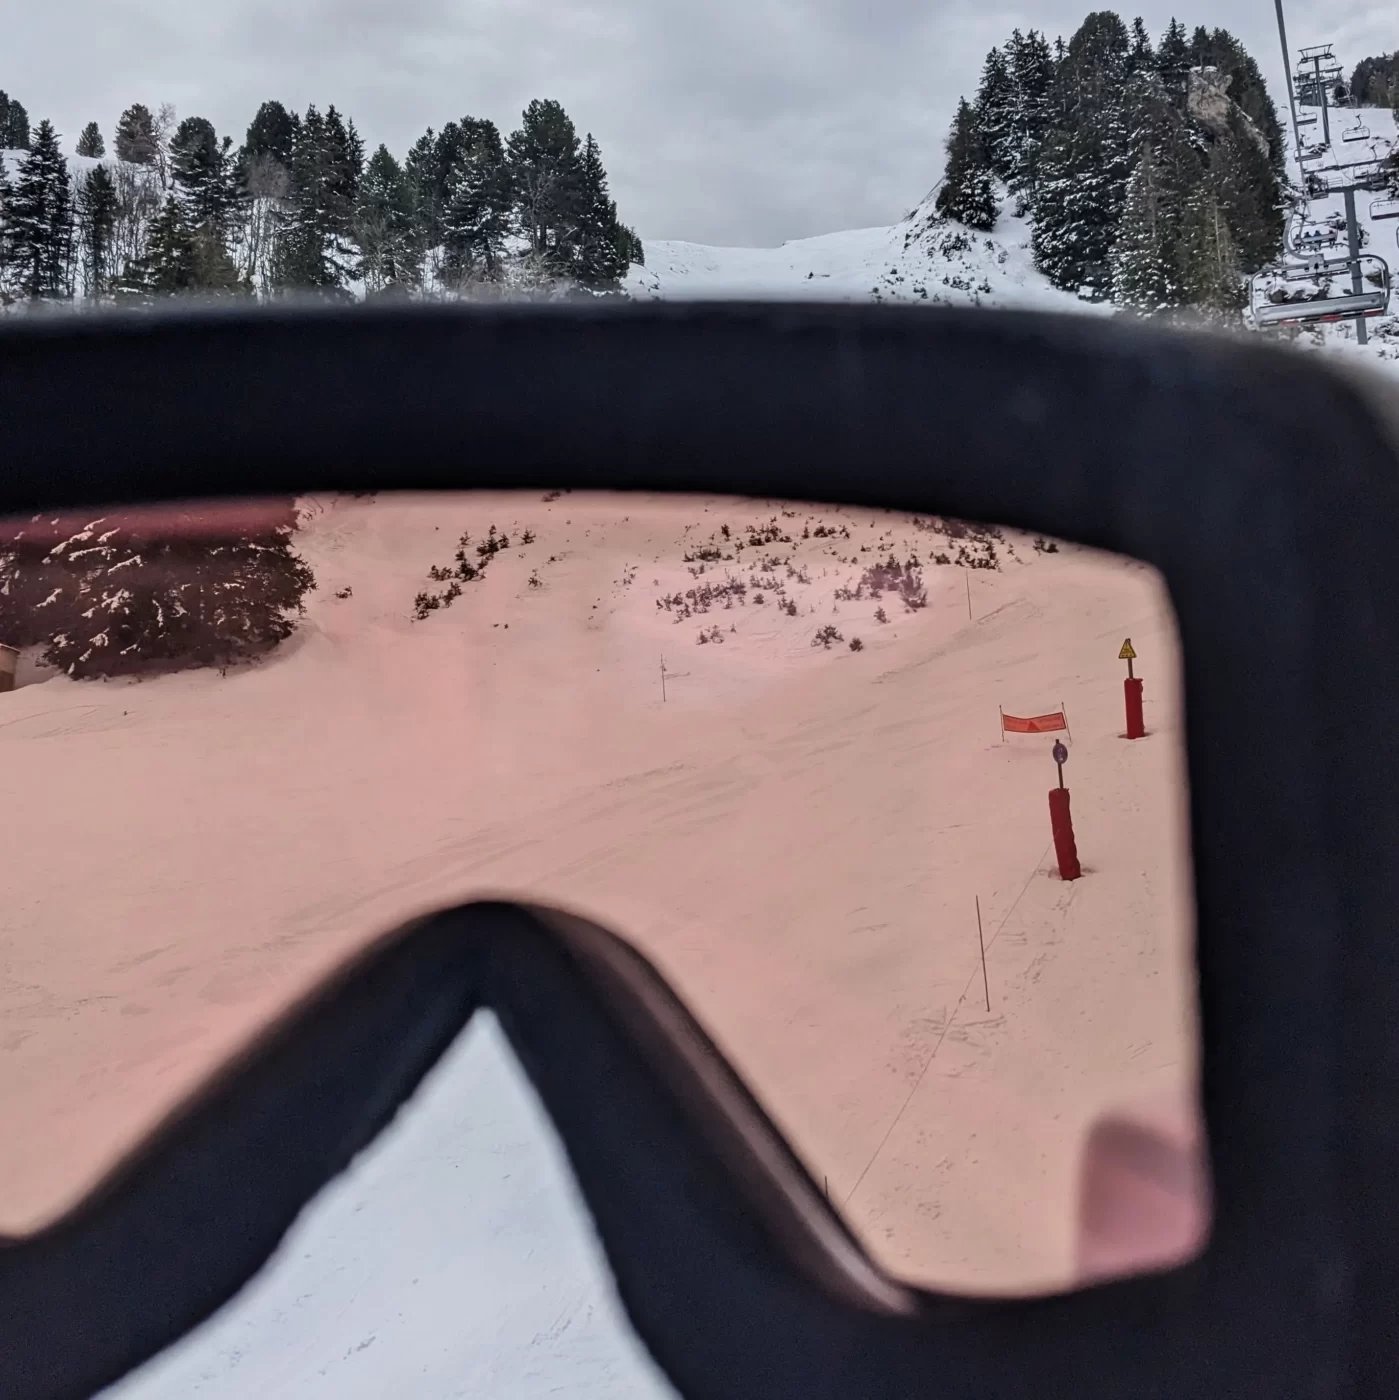 Oakley : masque de ski, casque de ski, lunette de soleil - Snowleader